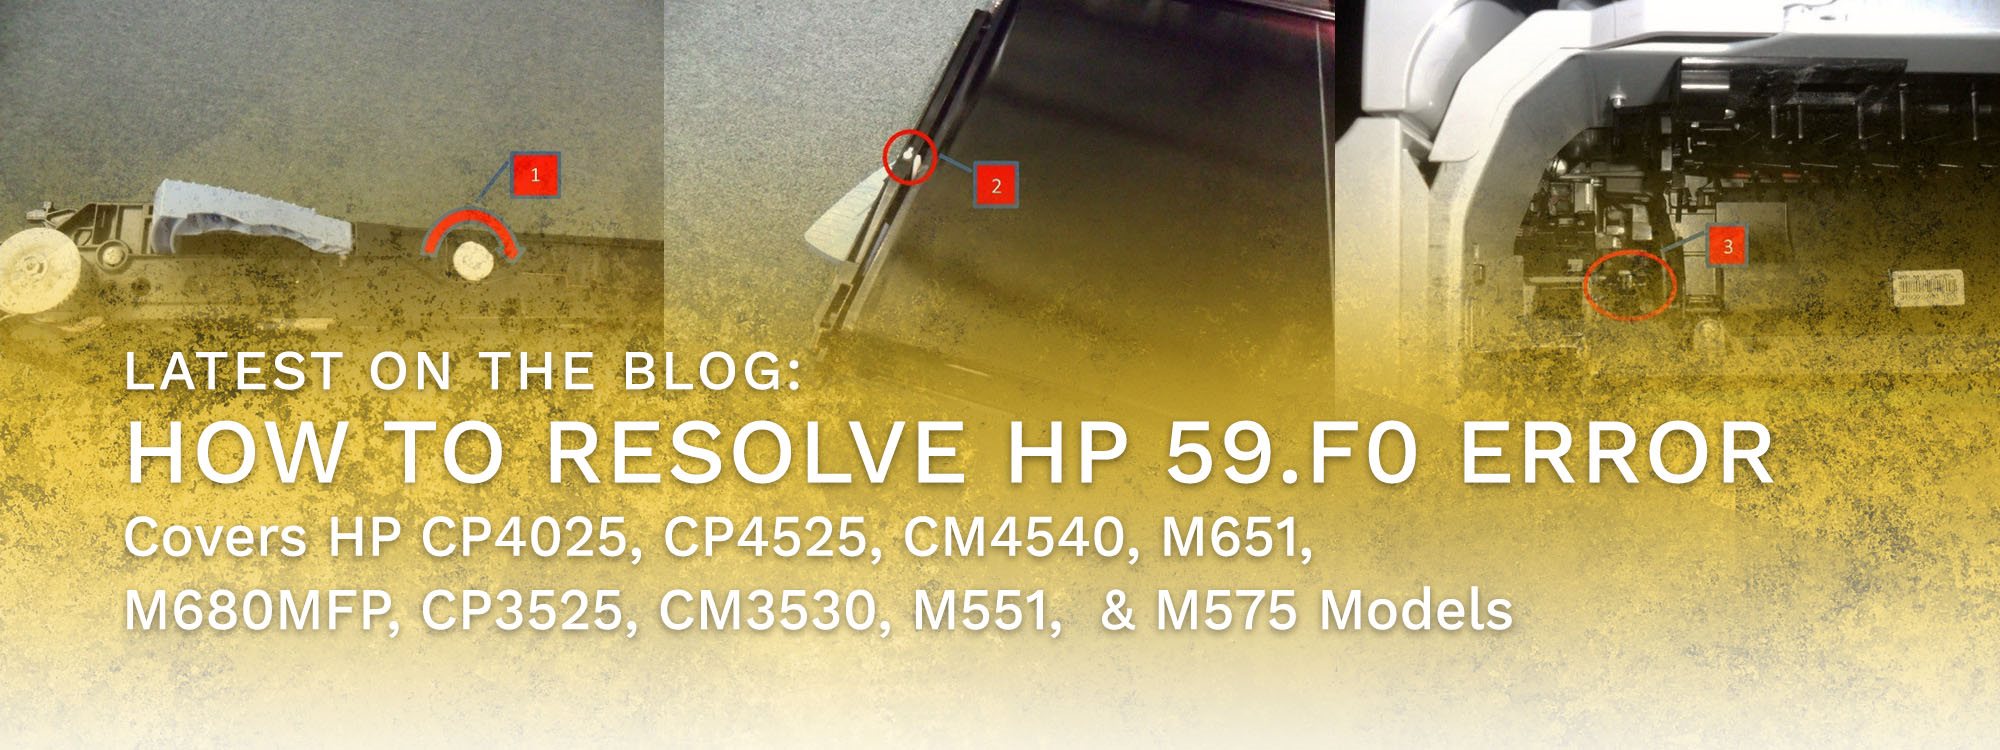 Latest on Blog HP 59.F0 Error